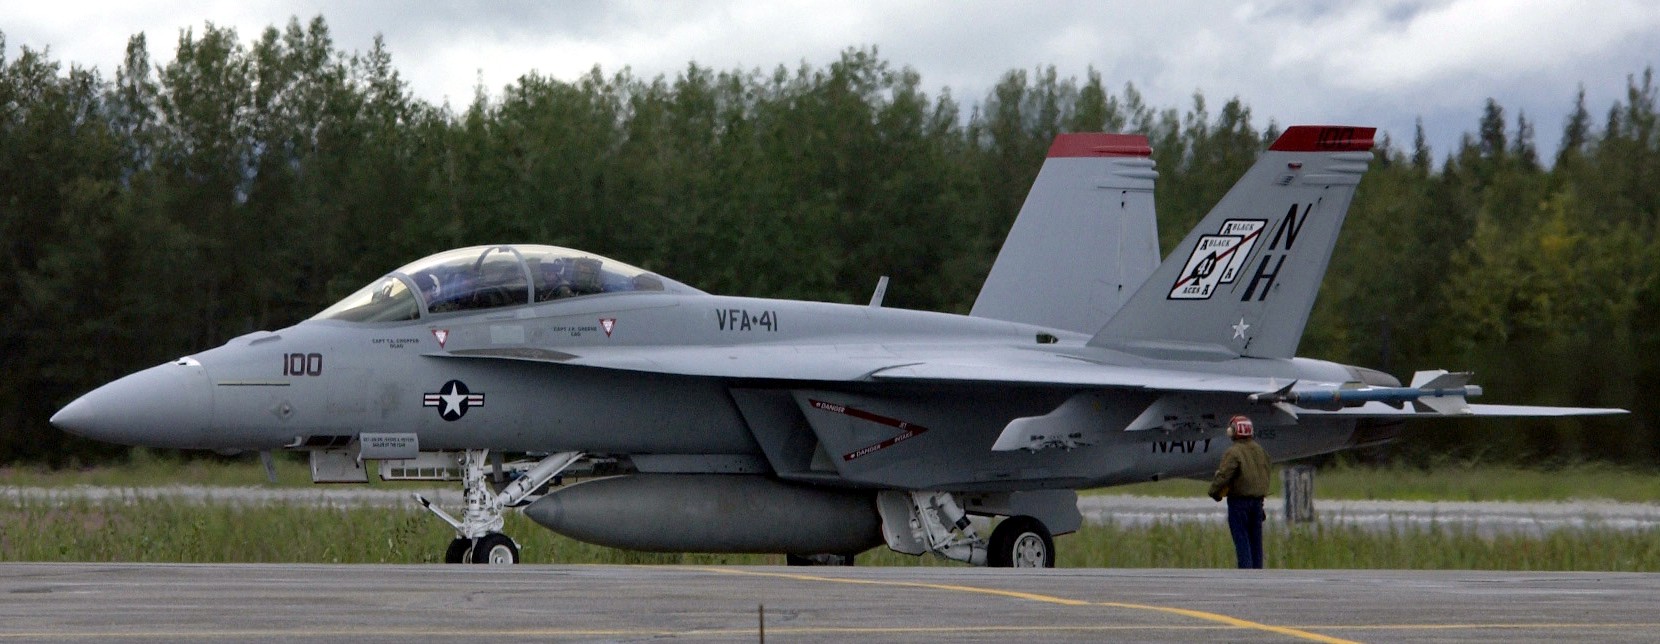 vfa-41 black aces strike fighter squadron f/a-18f super hornet cooperative thunder alaska 205p